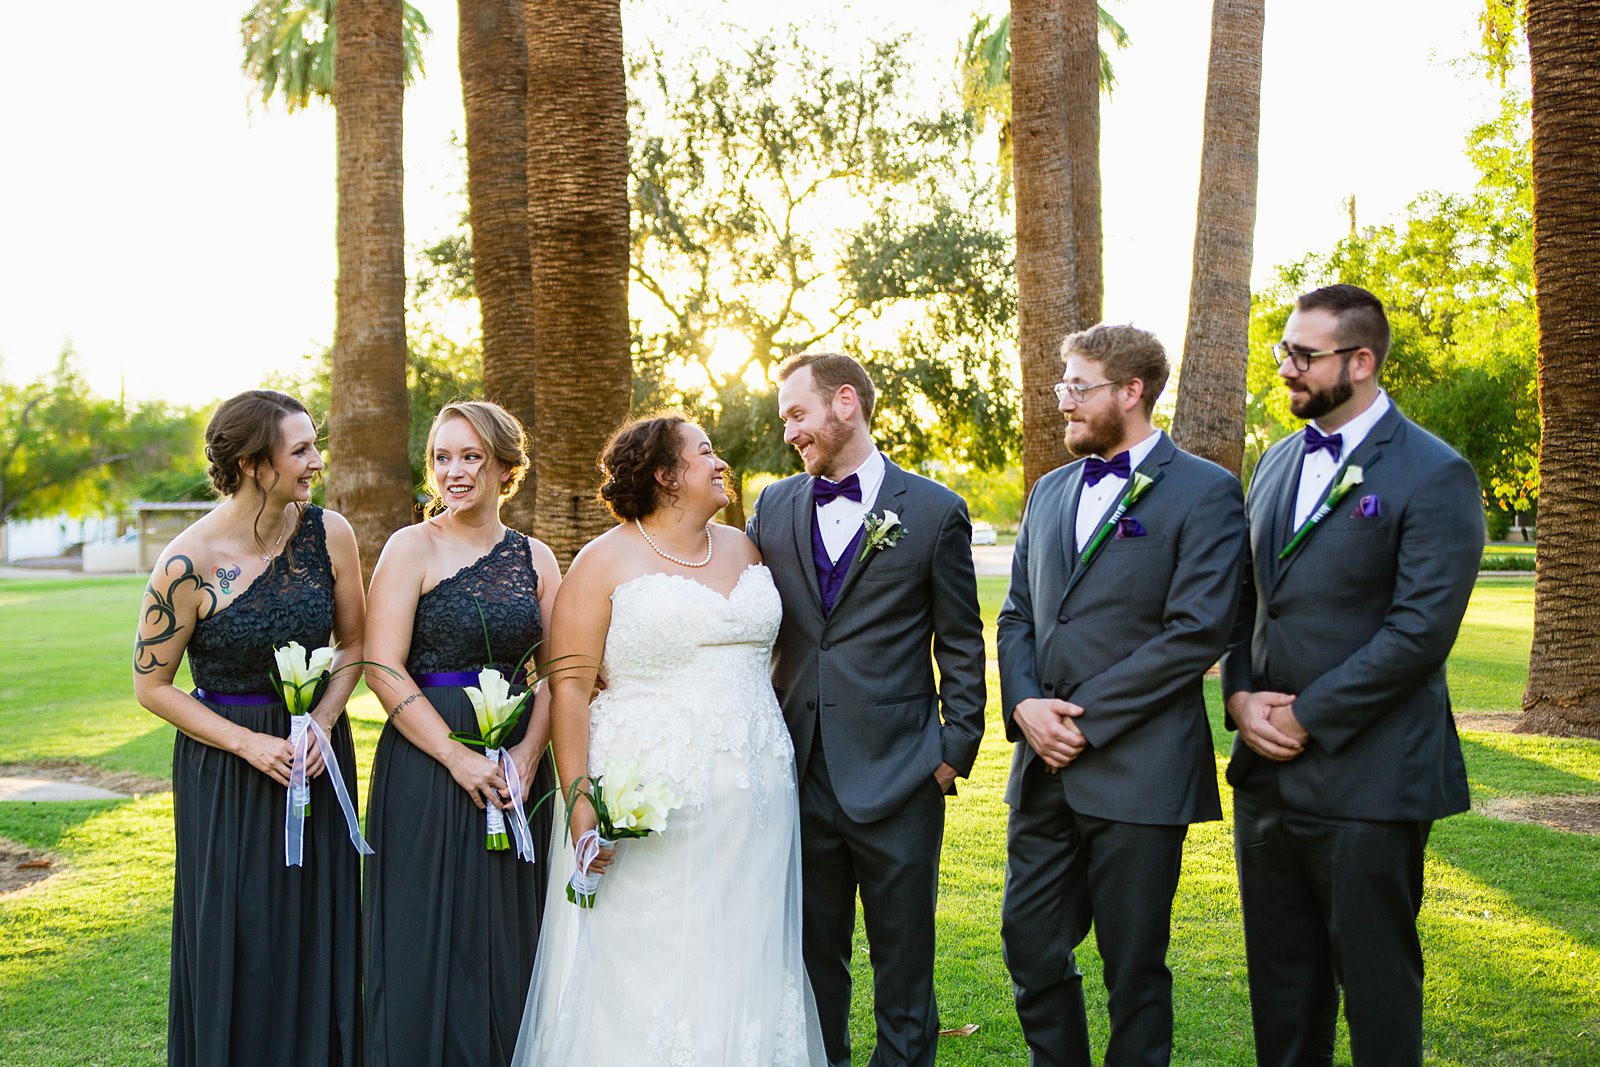 Bridal party together at a Encanto Park wedding by Arizona wedding photographer PMA Photography.